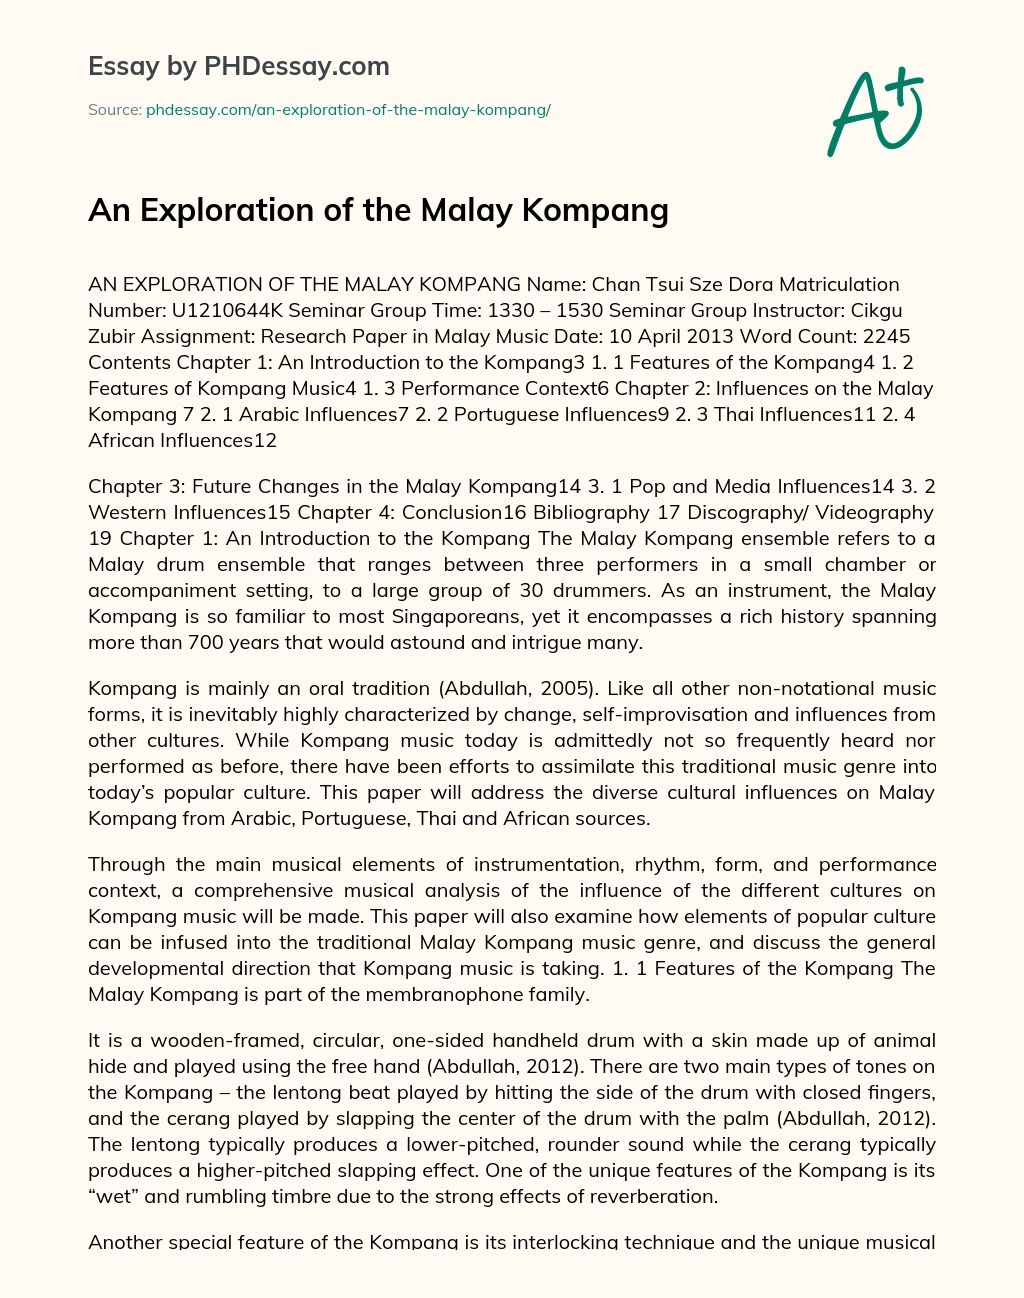 An Exploration of the Malay Kompang essay